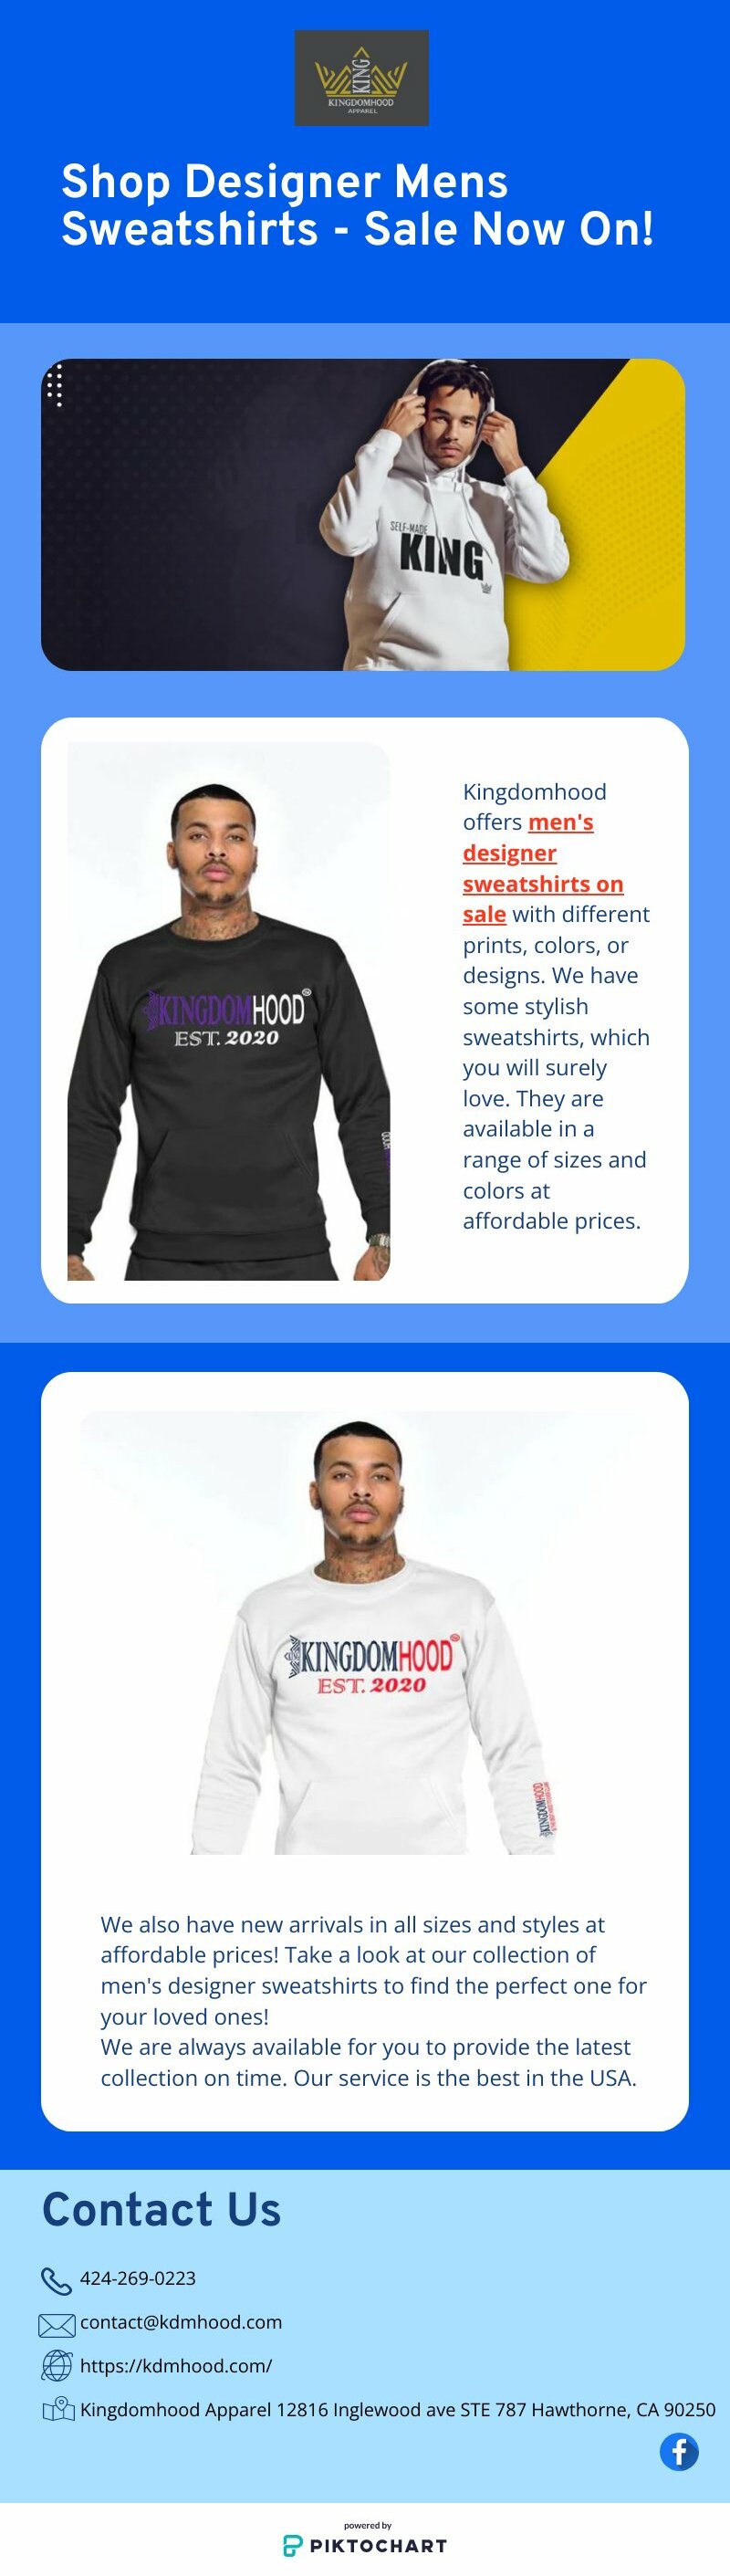 Shop Designer Mens Sweatshirts - Sale Now On! | Piktochart Visual Editor